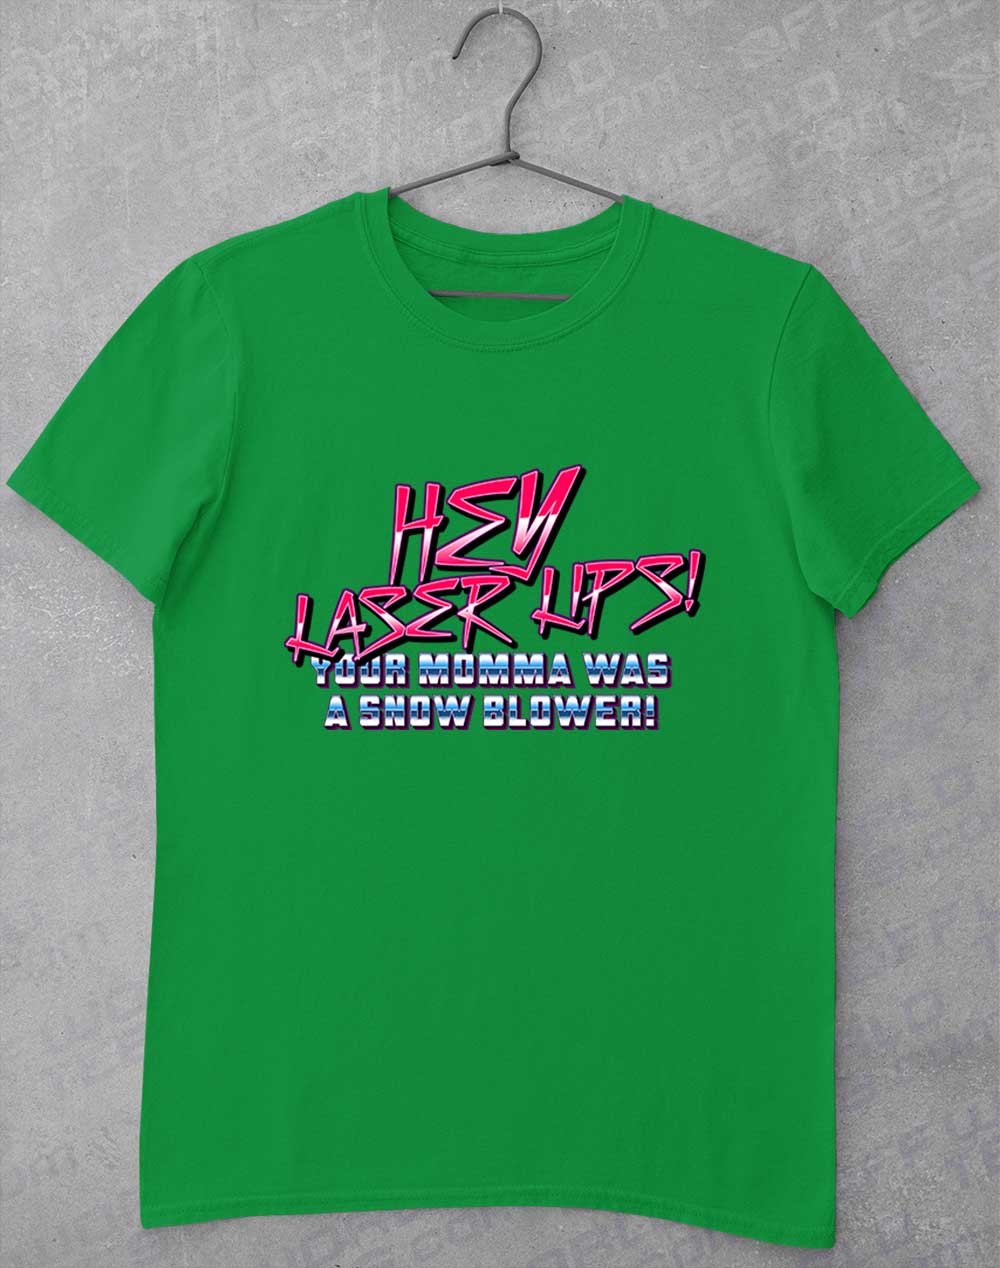 Irish Green - Hey Laser Lips T-Shirt